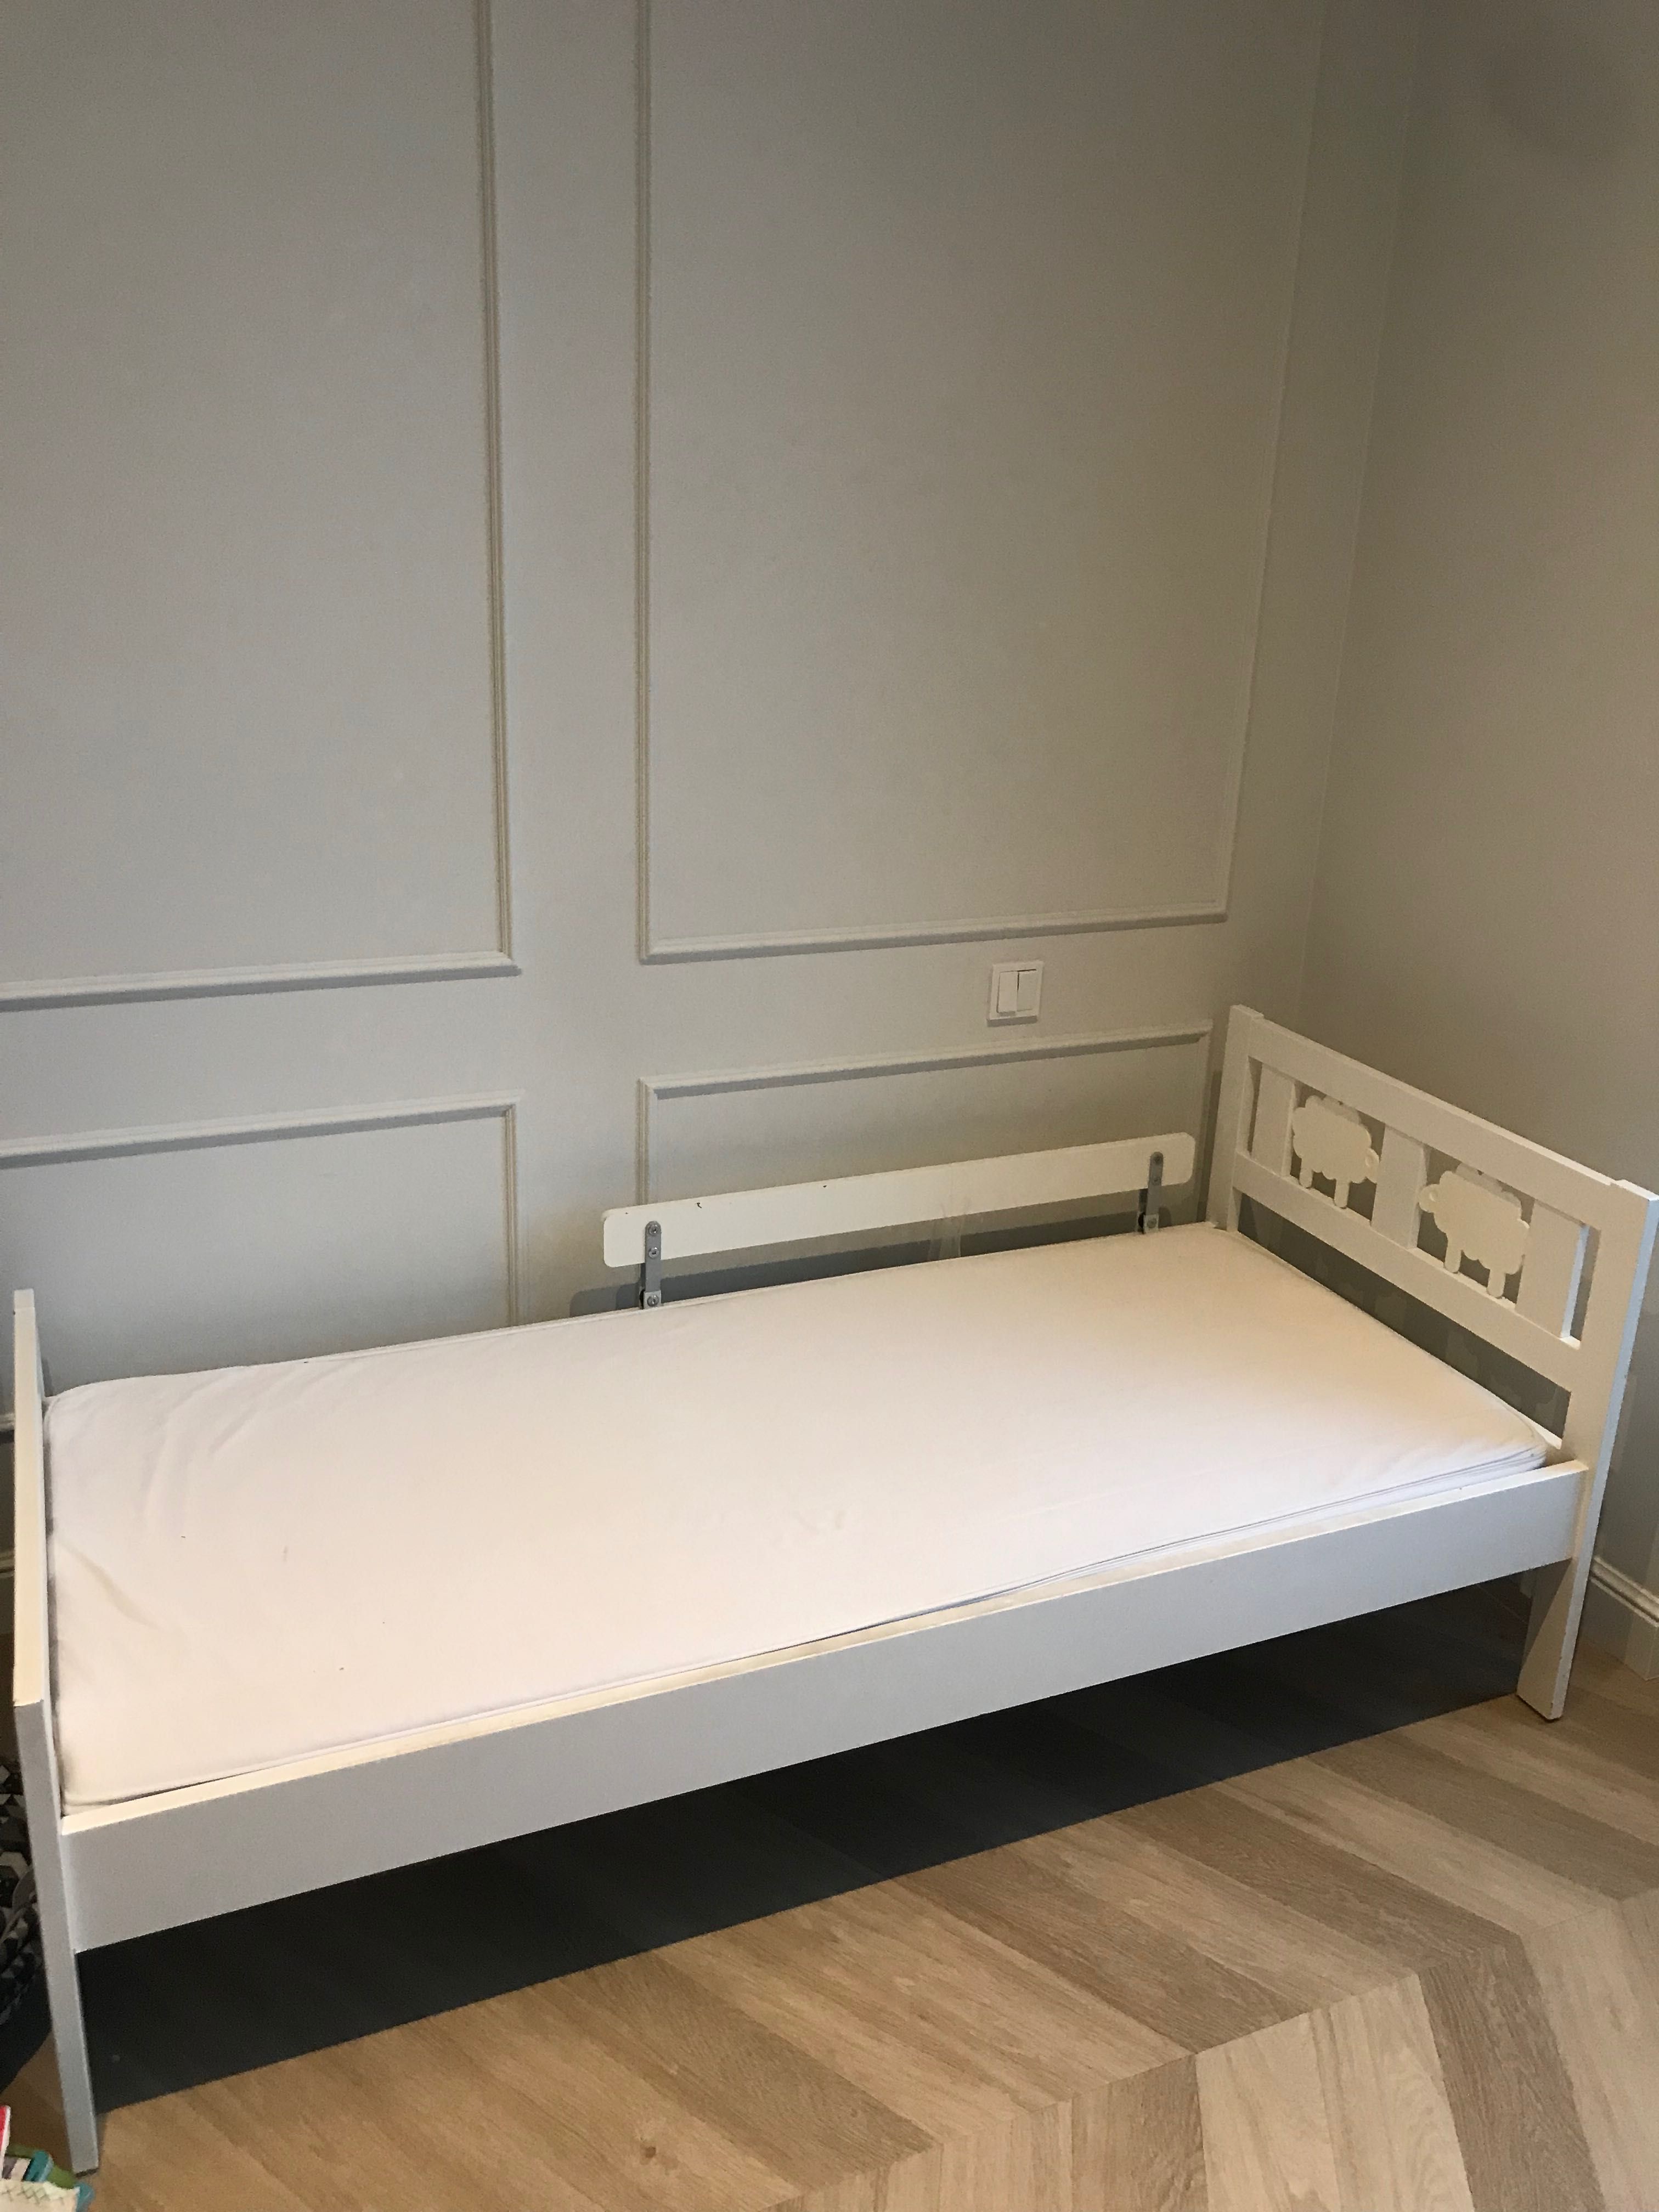 Łóżko dziecięce IKEA Kritter białe 70 x 160 cm + materac + barierka